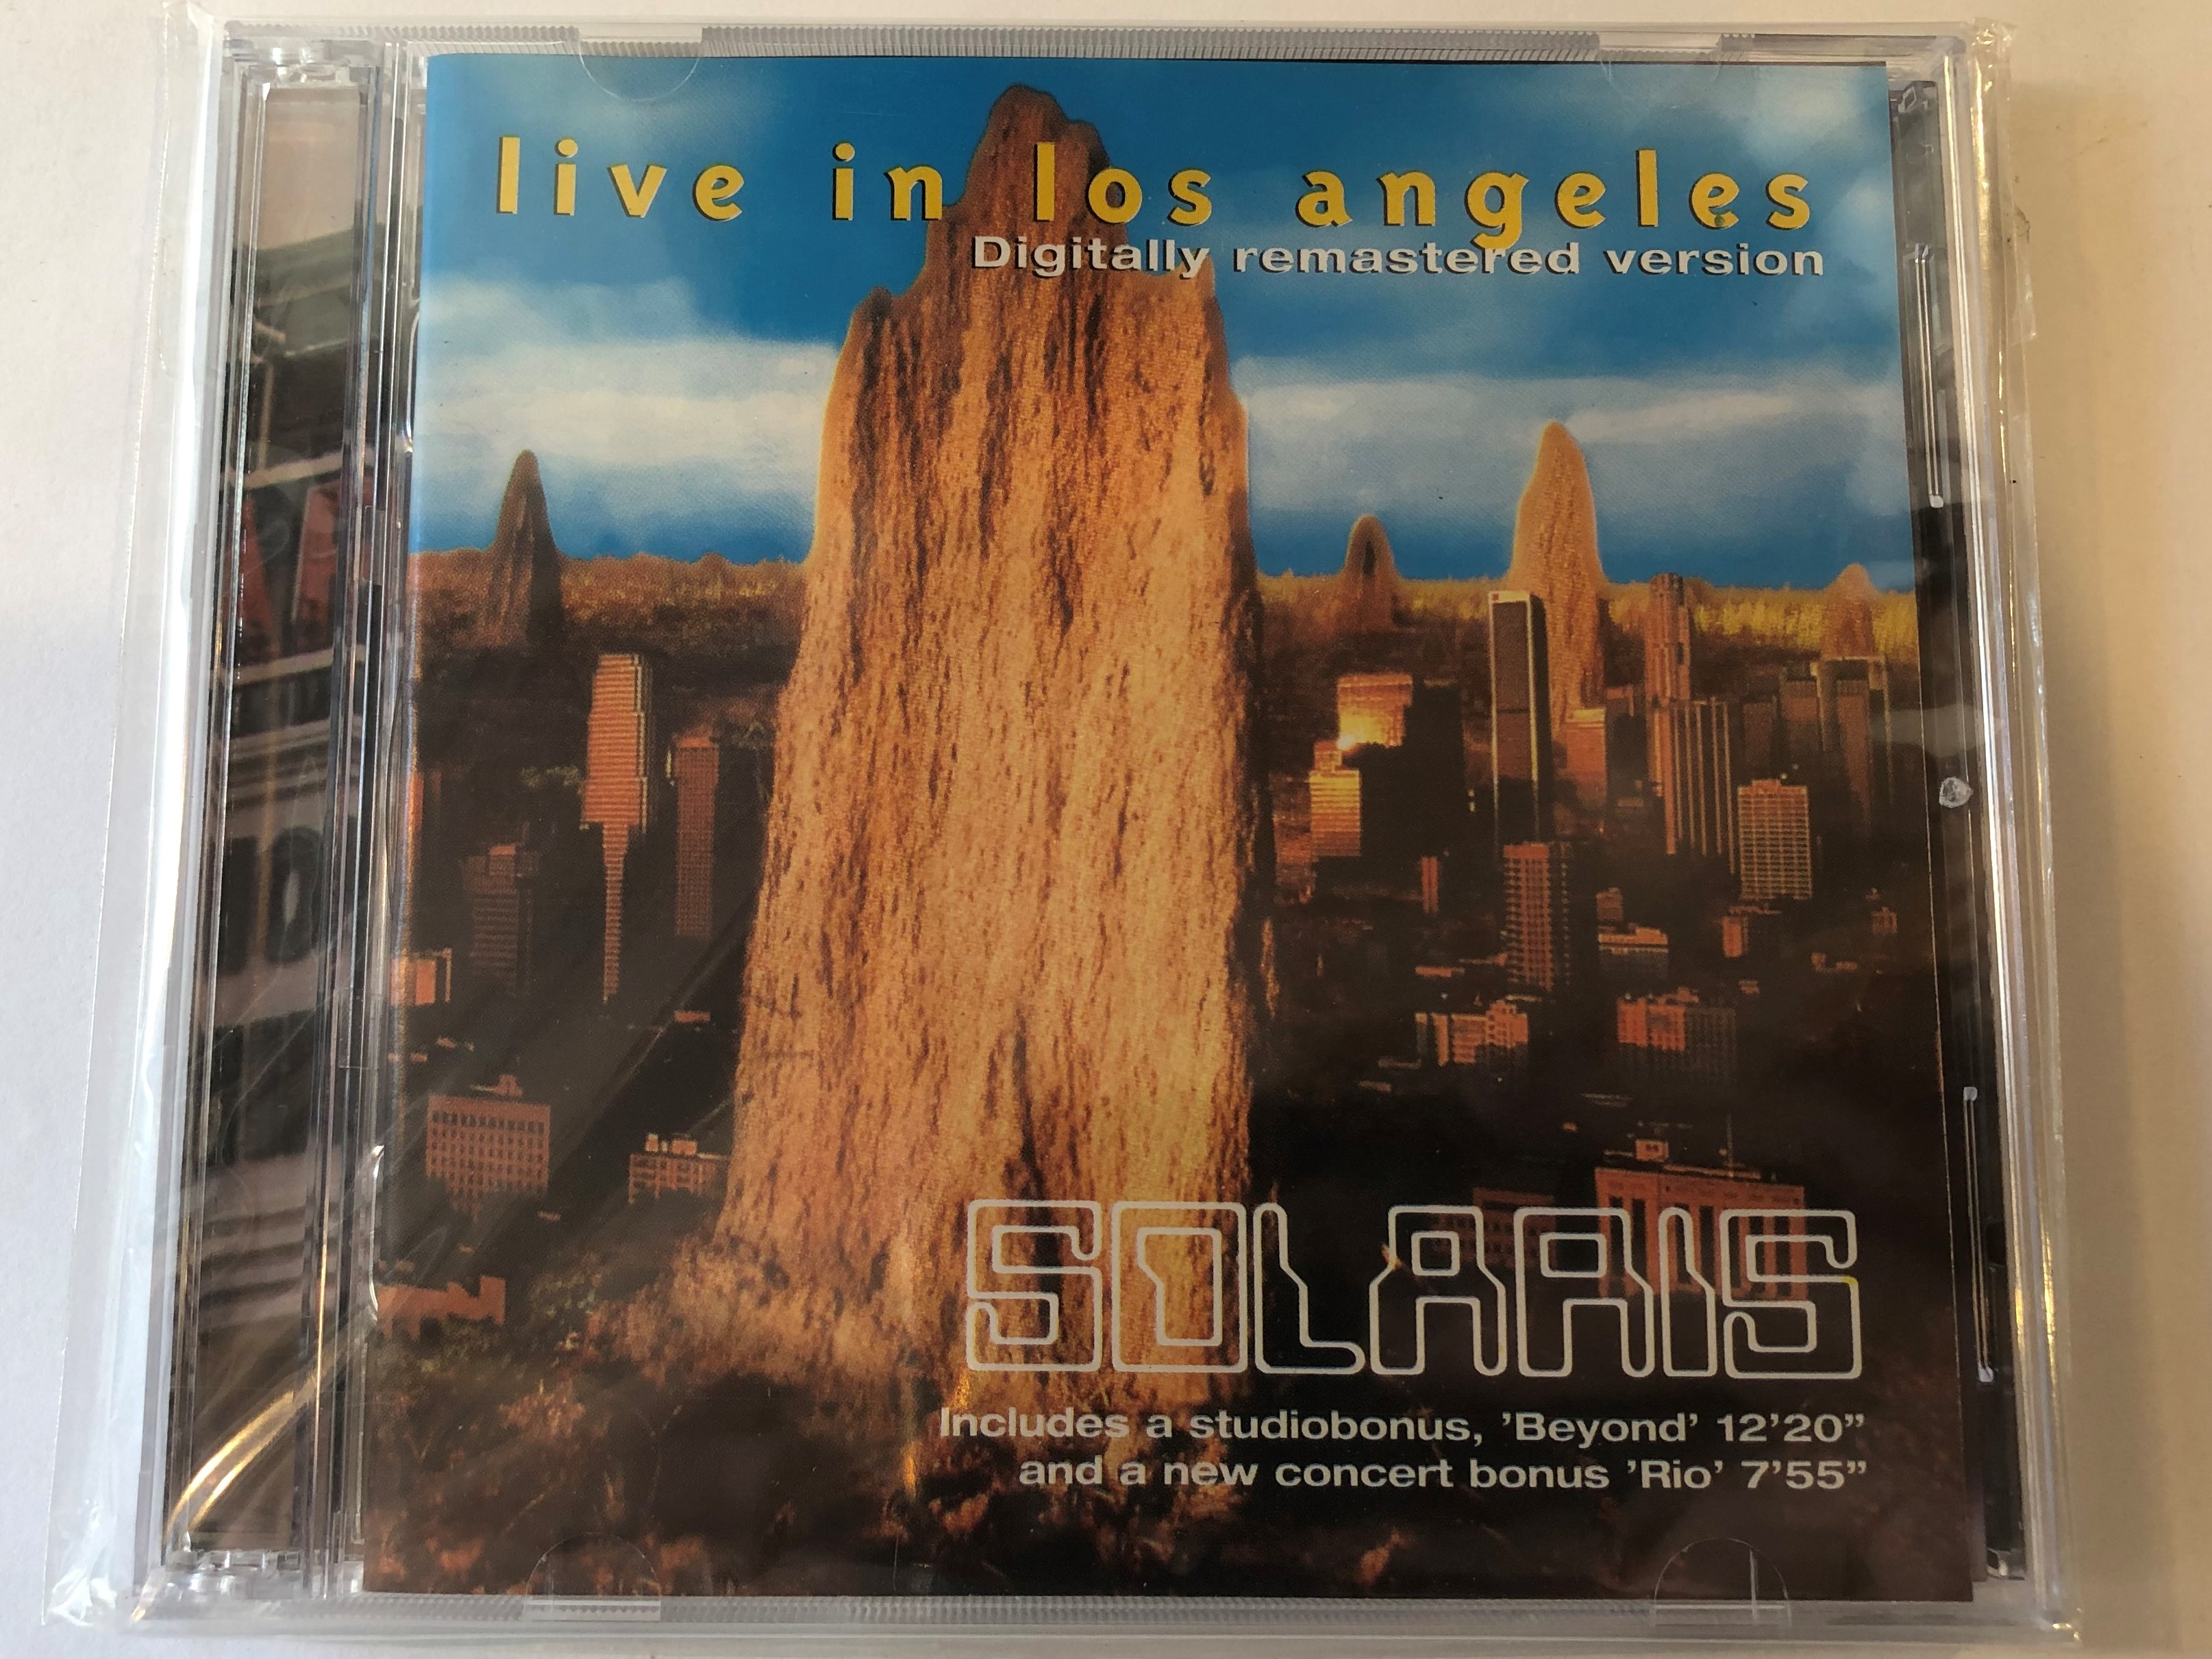 live-in-los-angeles-digitally-remastered-version-solaris-includes-a-studiobonus-beyond-1220-and-a-new-concert-bonus-rio-755-solaris-music-productions-2x-audio-cd-2000-5998272.jpg